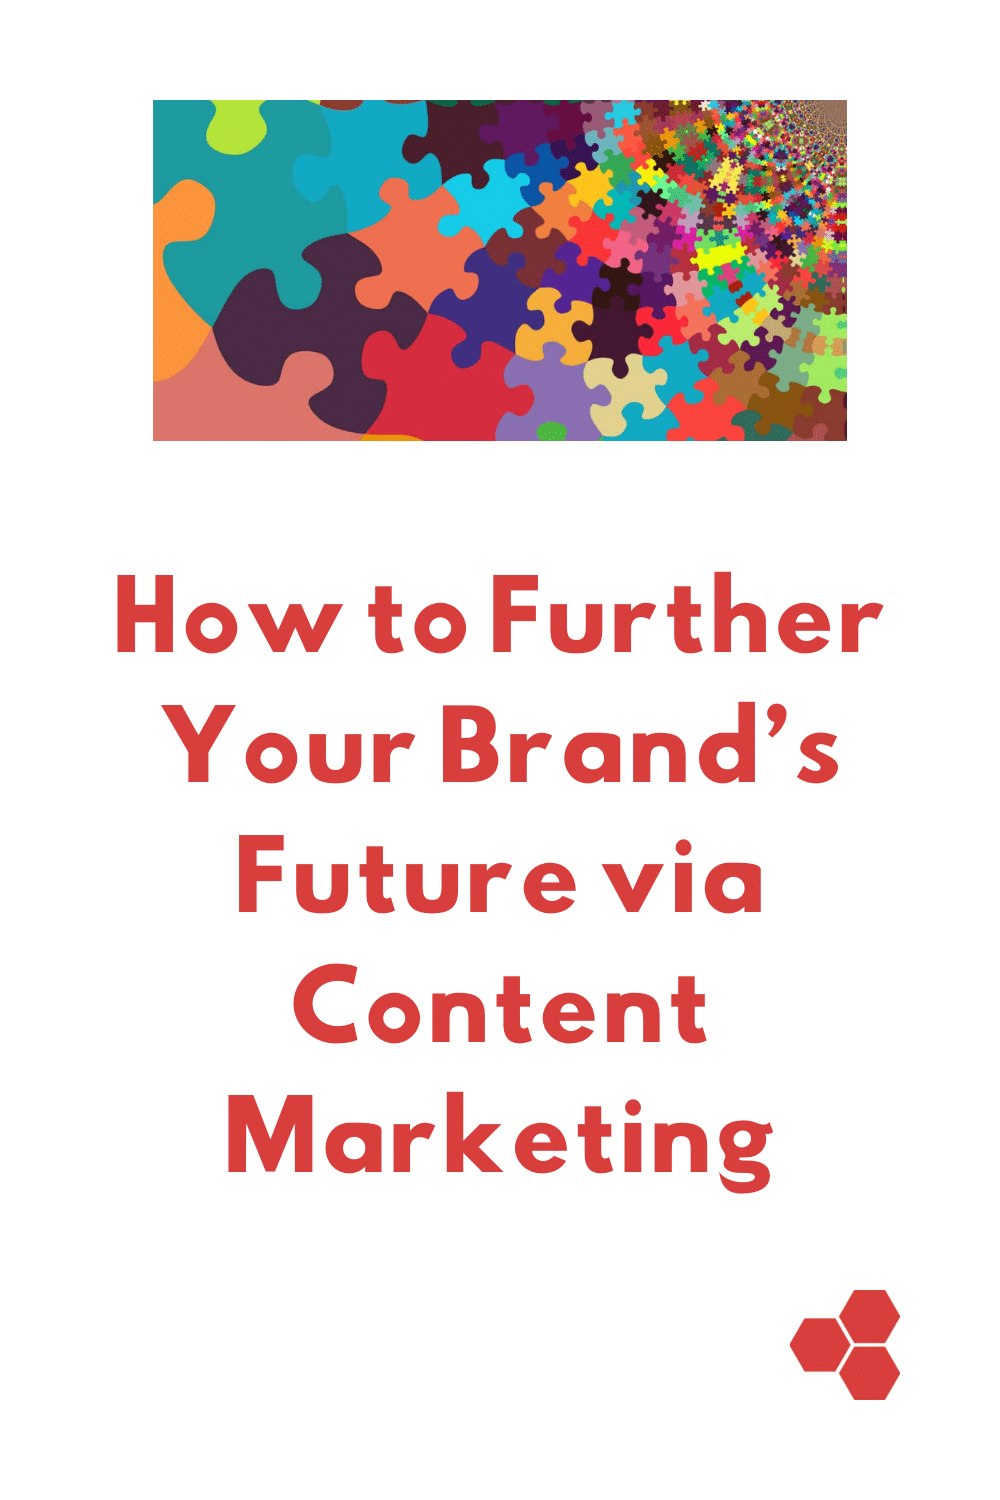 Ensure Your Brand’s Future via Content Marketing